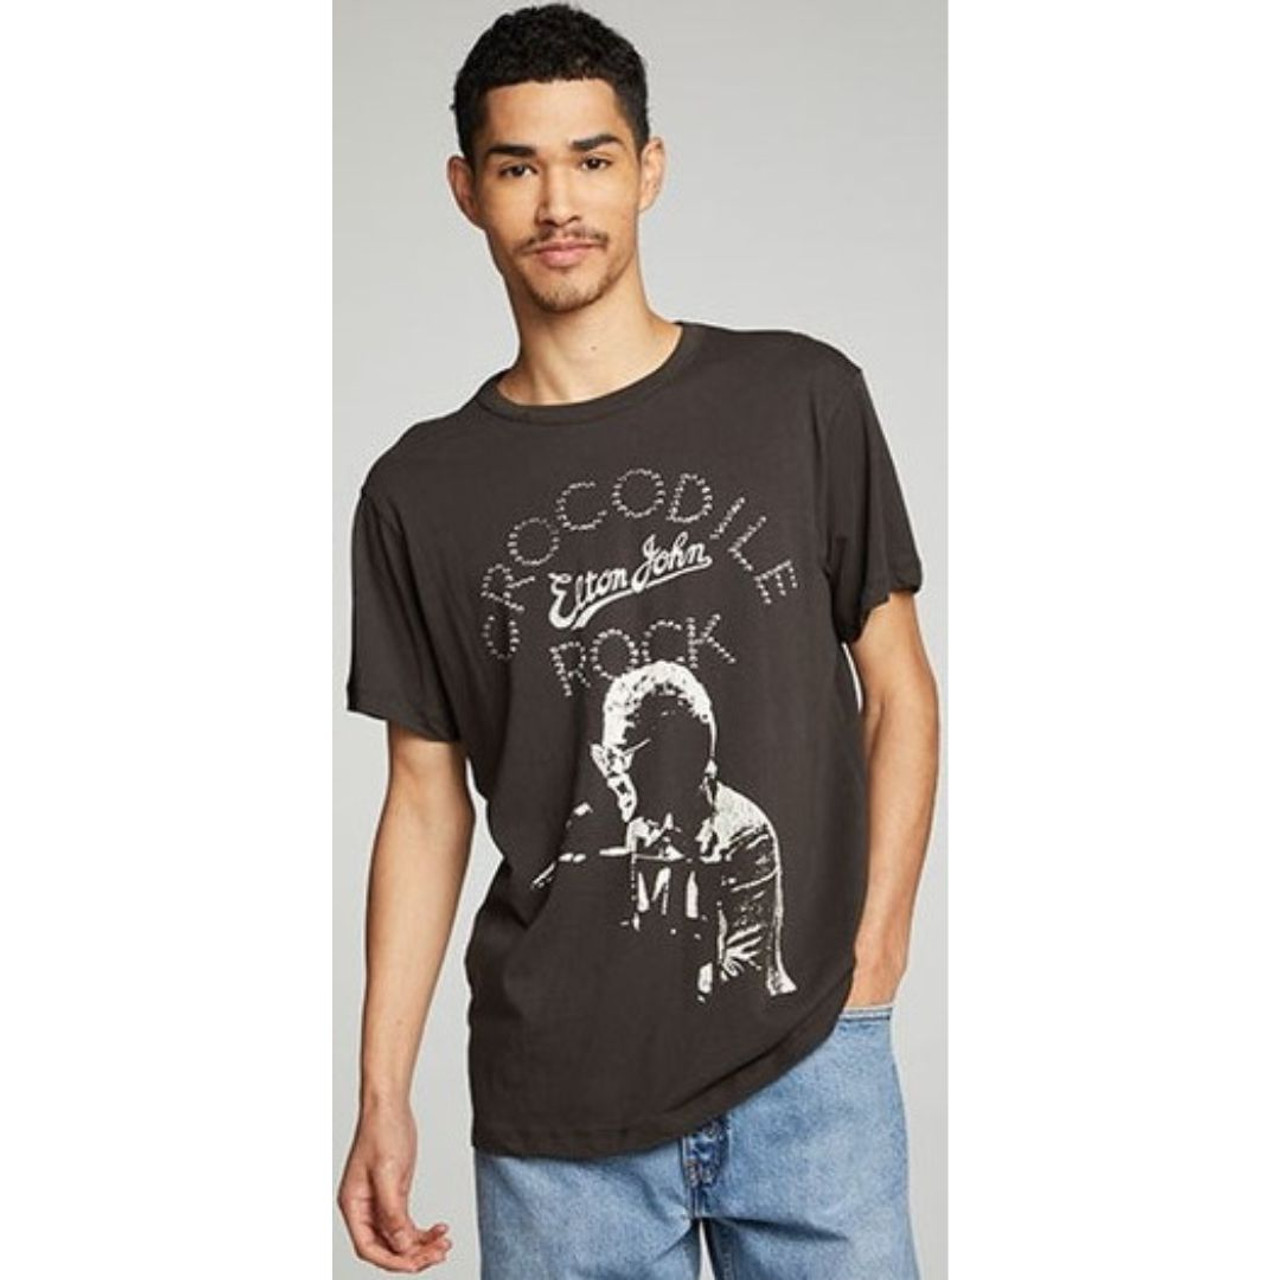 Slange tragedie Bliv sur Elton John Crocodile Rock Men's Fashion T-shirt by Chaser